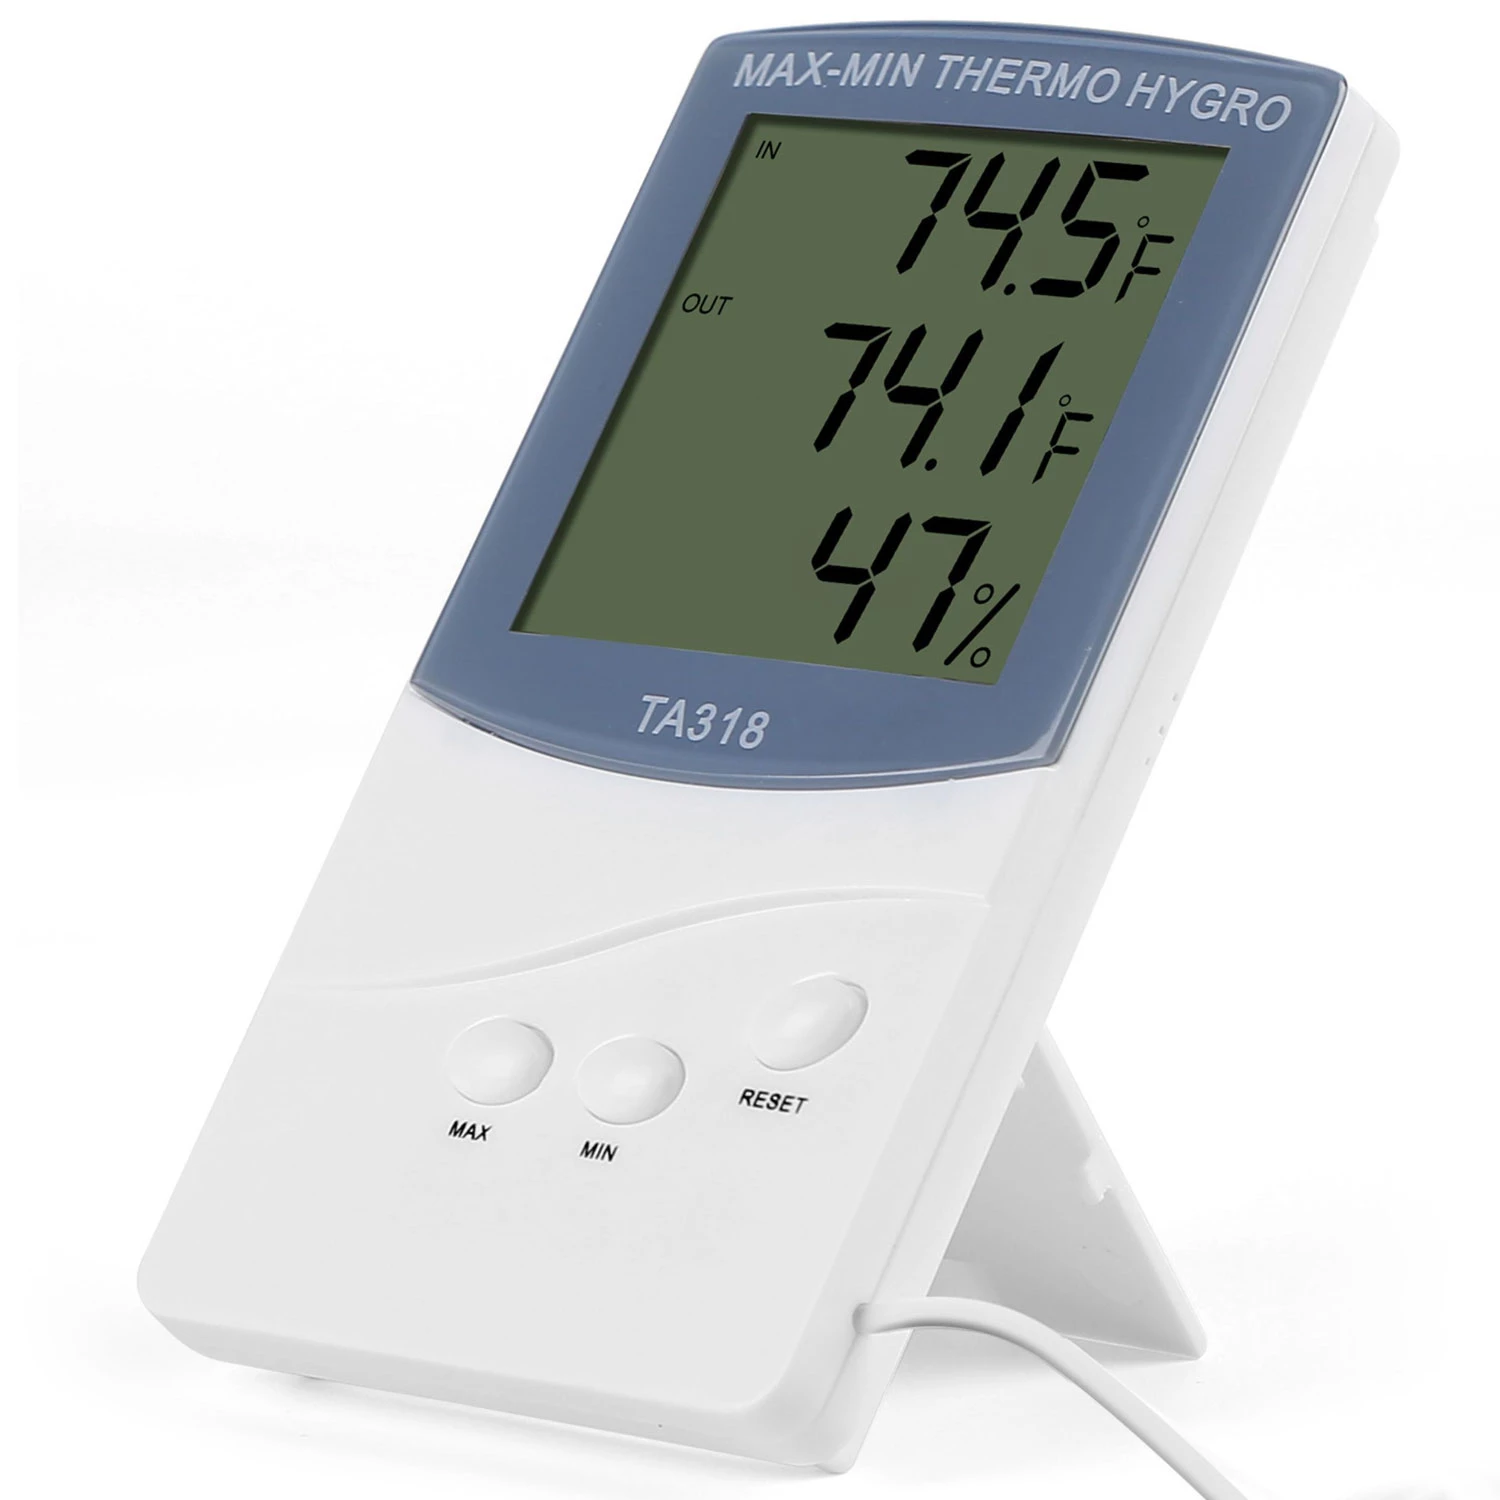 2-in-1 Digital Hygrometer Thermometer - LCD Display - Indoor/Outdoor - Room/Greenhouse